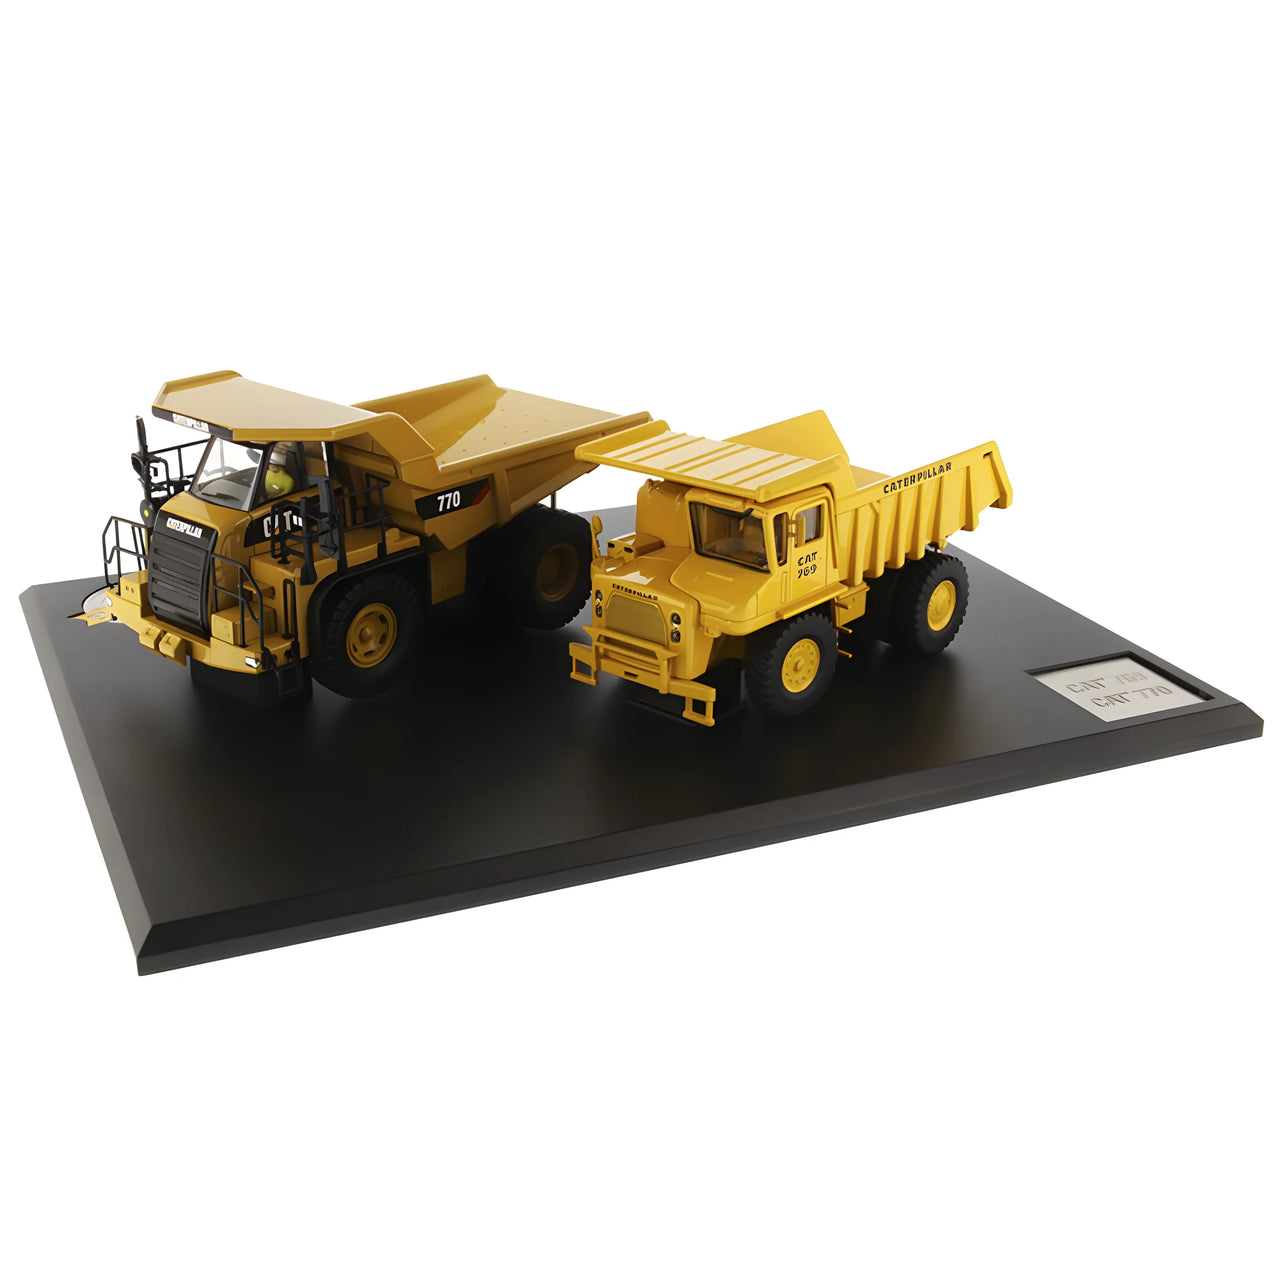 85562 Caterpillar 769 &amp; 770 Mining Truck 1:50 Scale